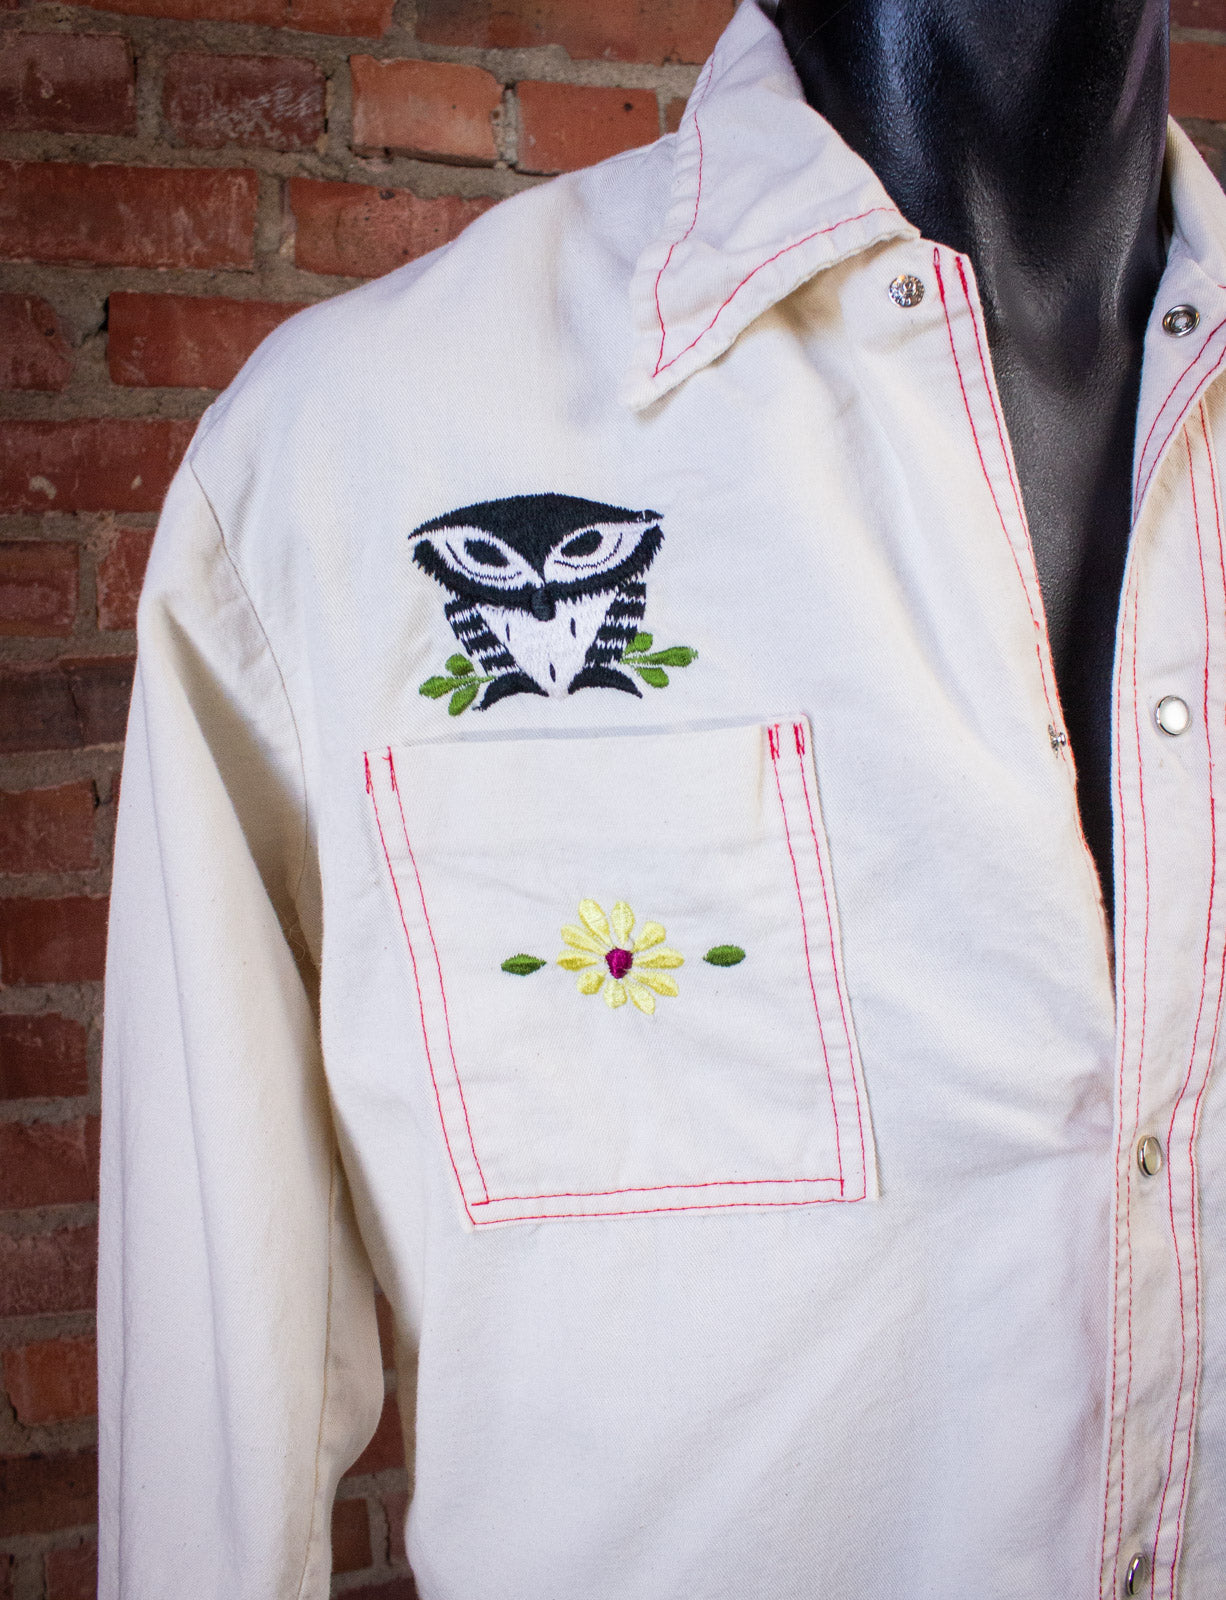 Vintage Bordados Embroidered Owl Pearl Snap Western Shirt White XL